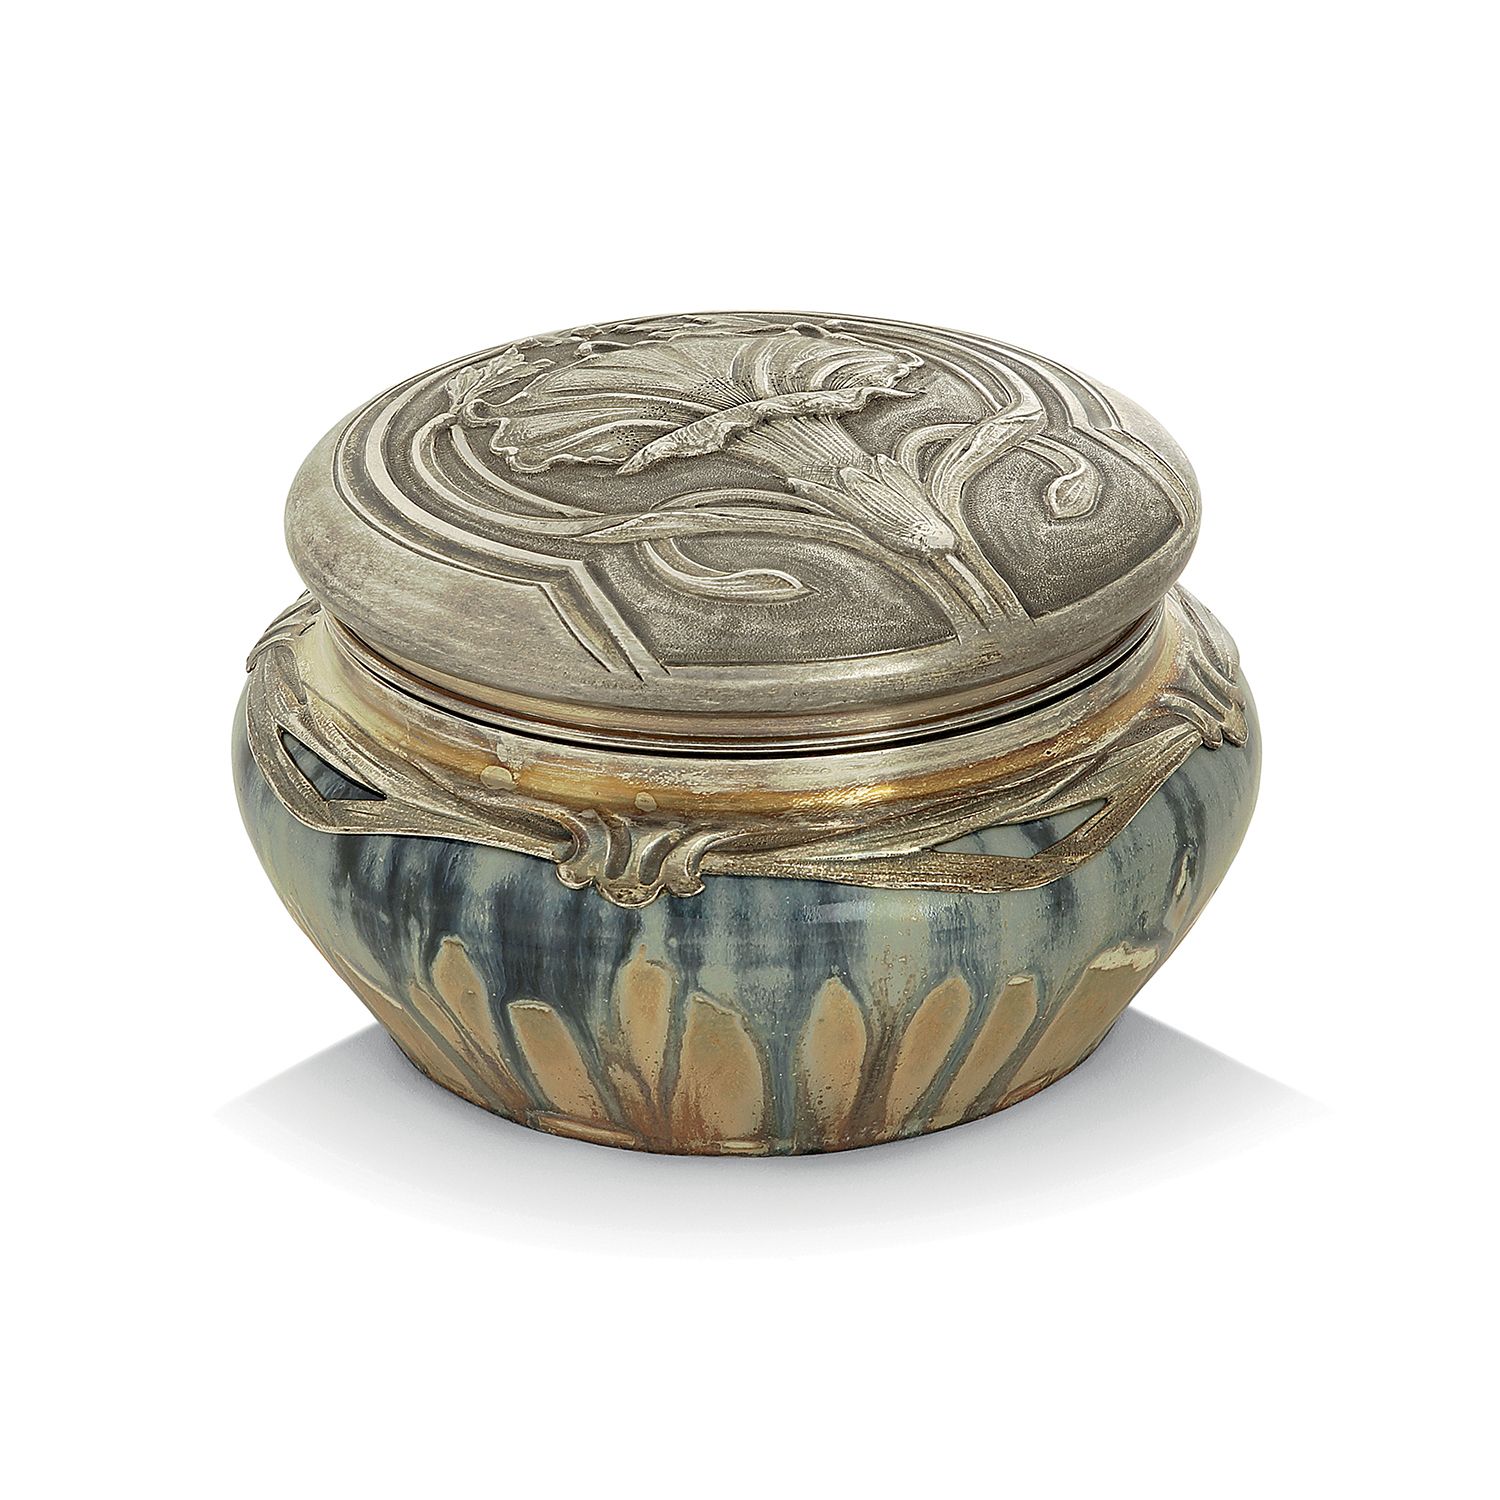 Null 维克托-萨基尔(1809-1894)&萨基尔(金匠)

一个炻器圆盒，在赭石和米色的背景上装饰有蓝色的耦合物，有一个银色的植物支架和盖子，上面有浮雕的&hellip;